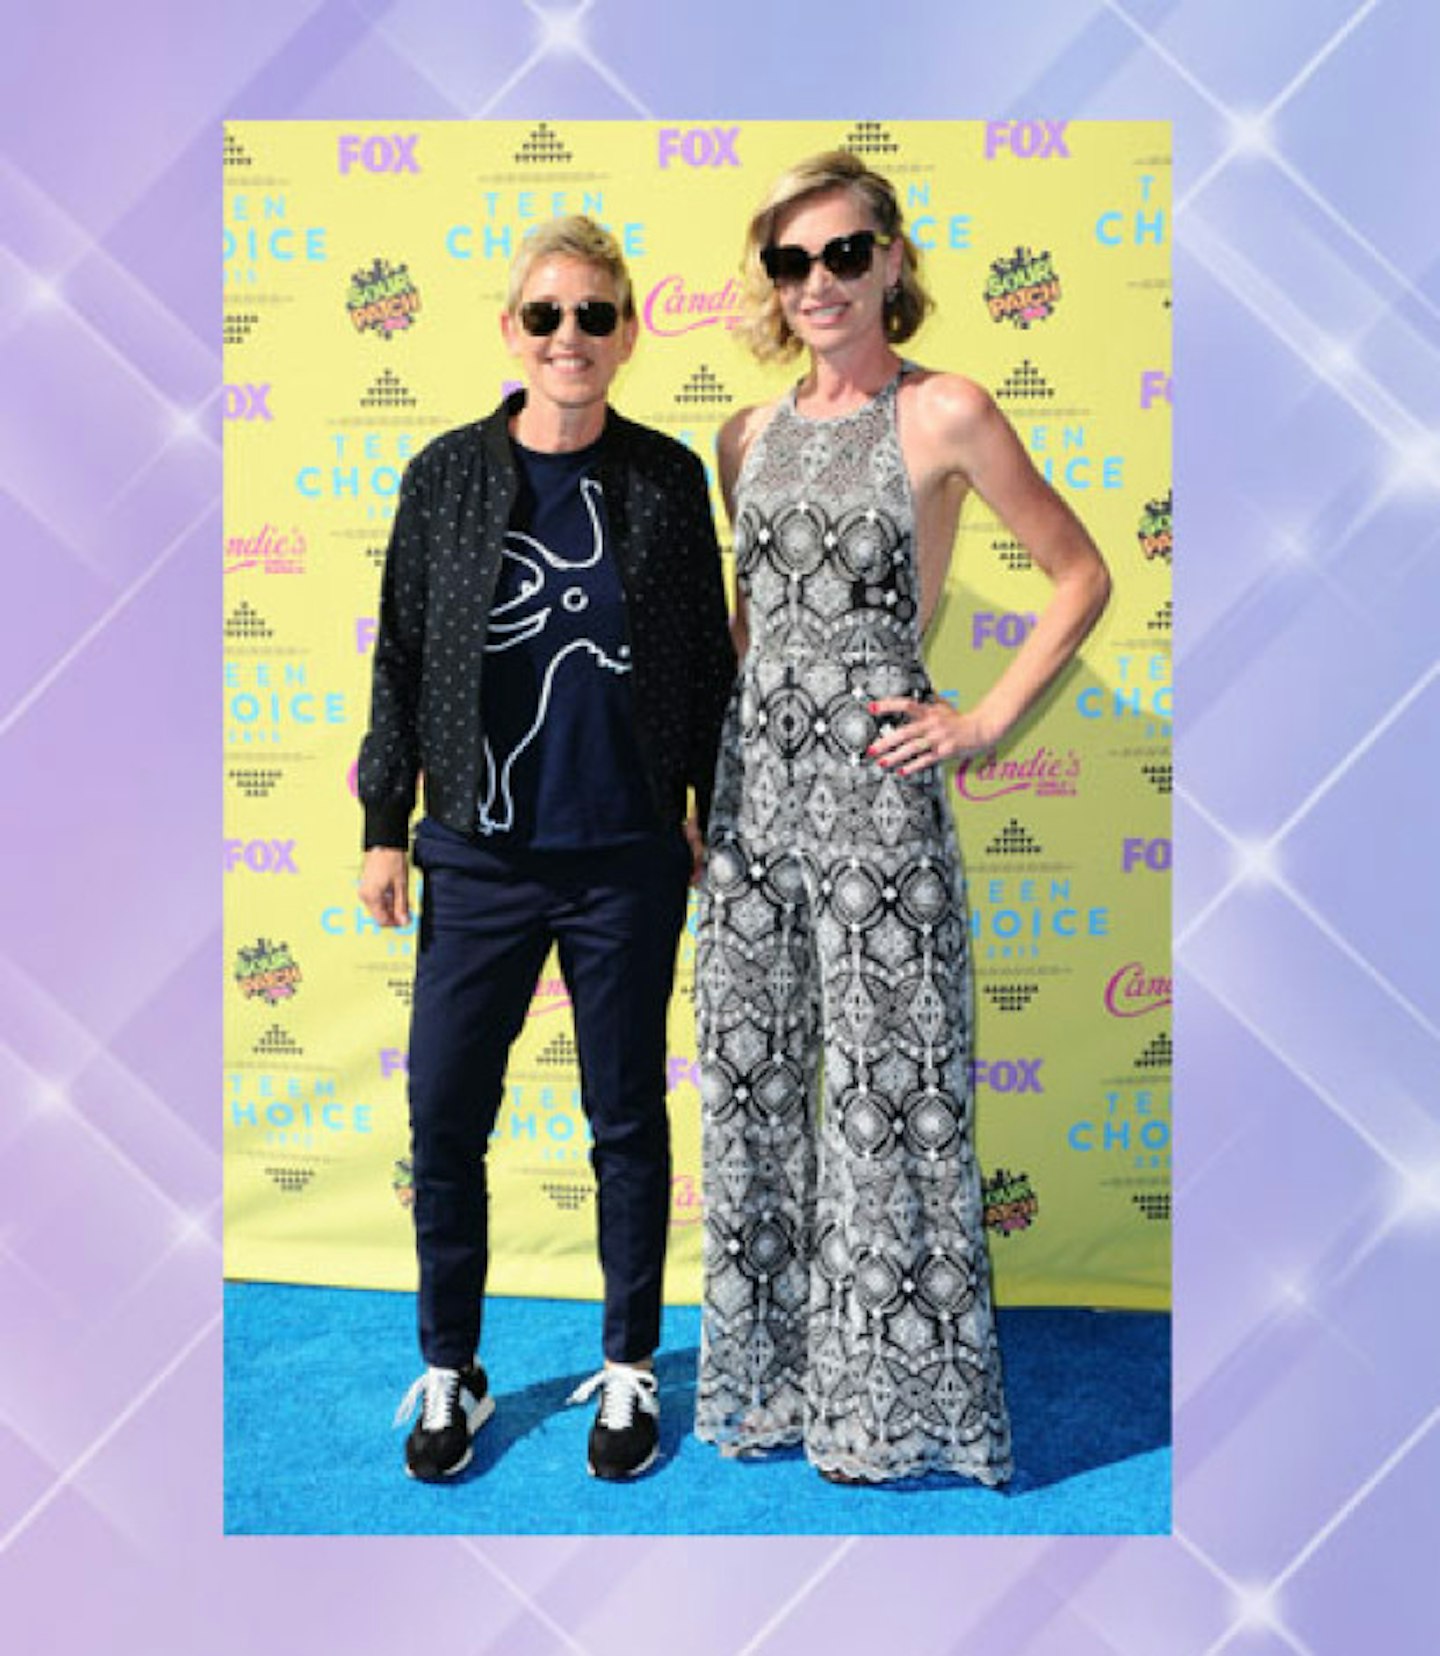 Ellen DeGeneres and wife Portia de Rossi